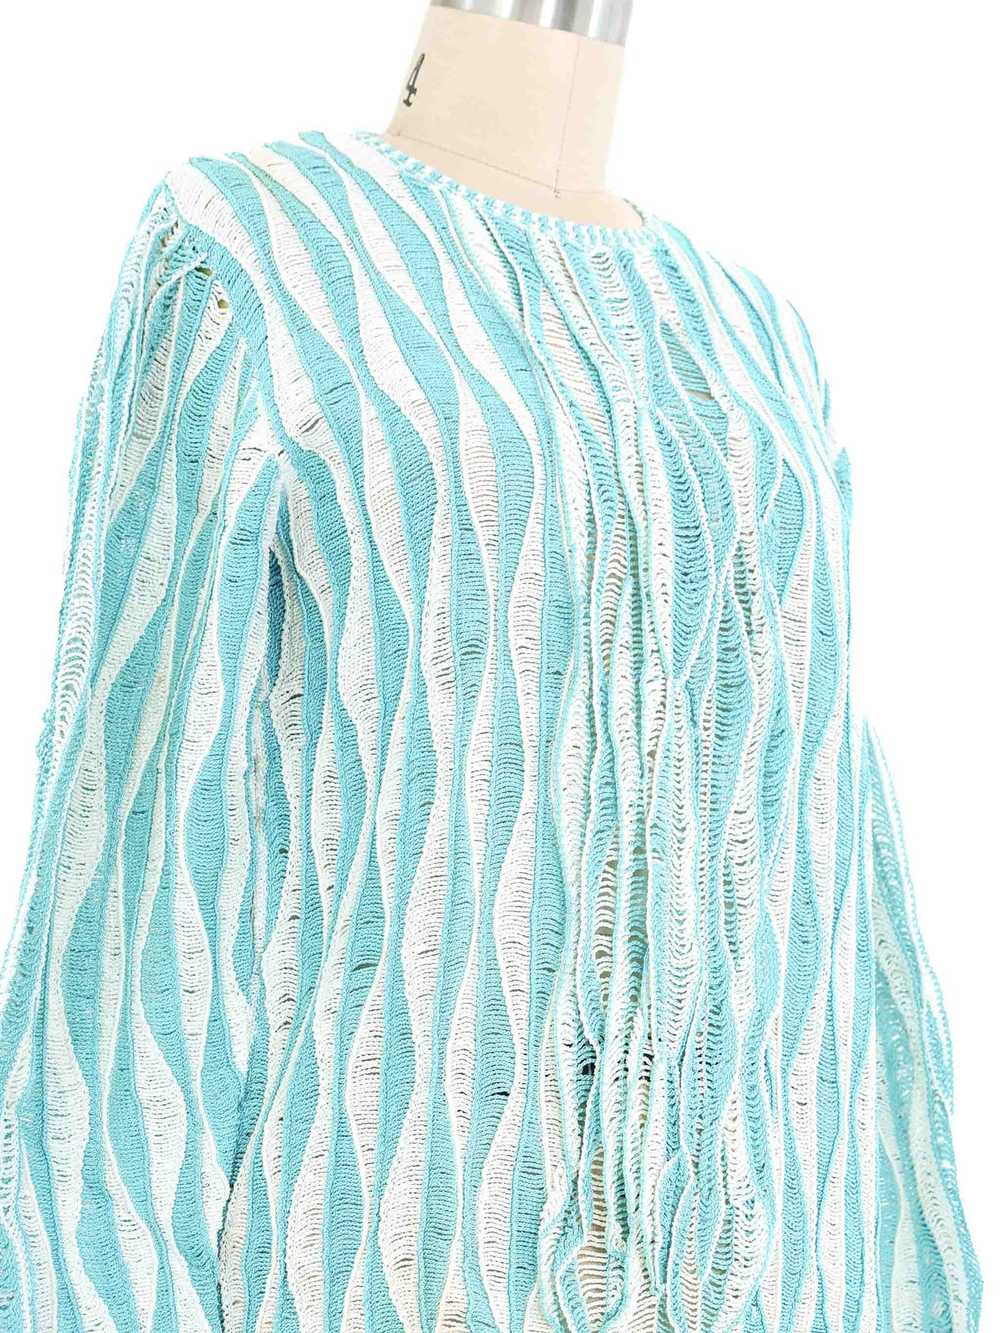 Turquoise Wave Crochet Top - image 2